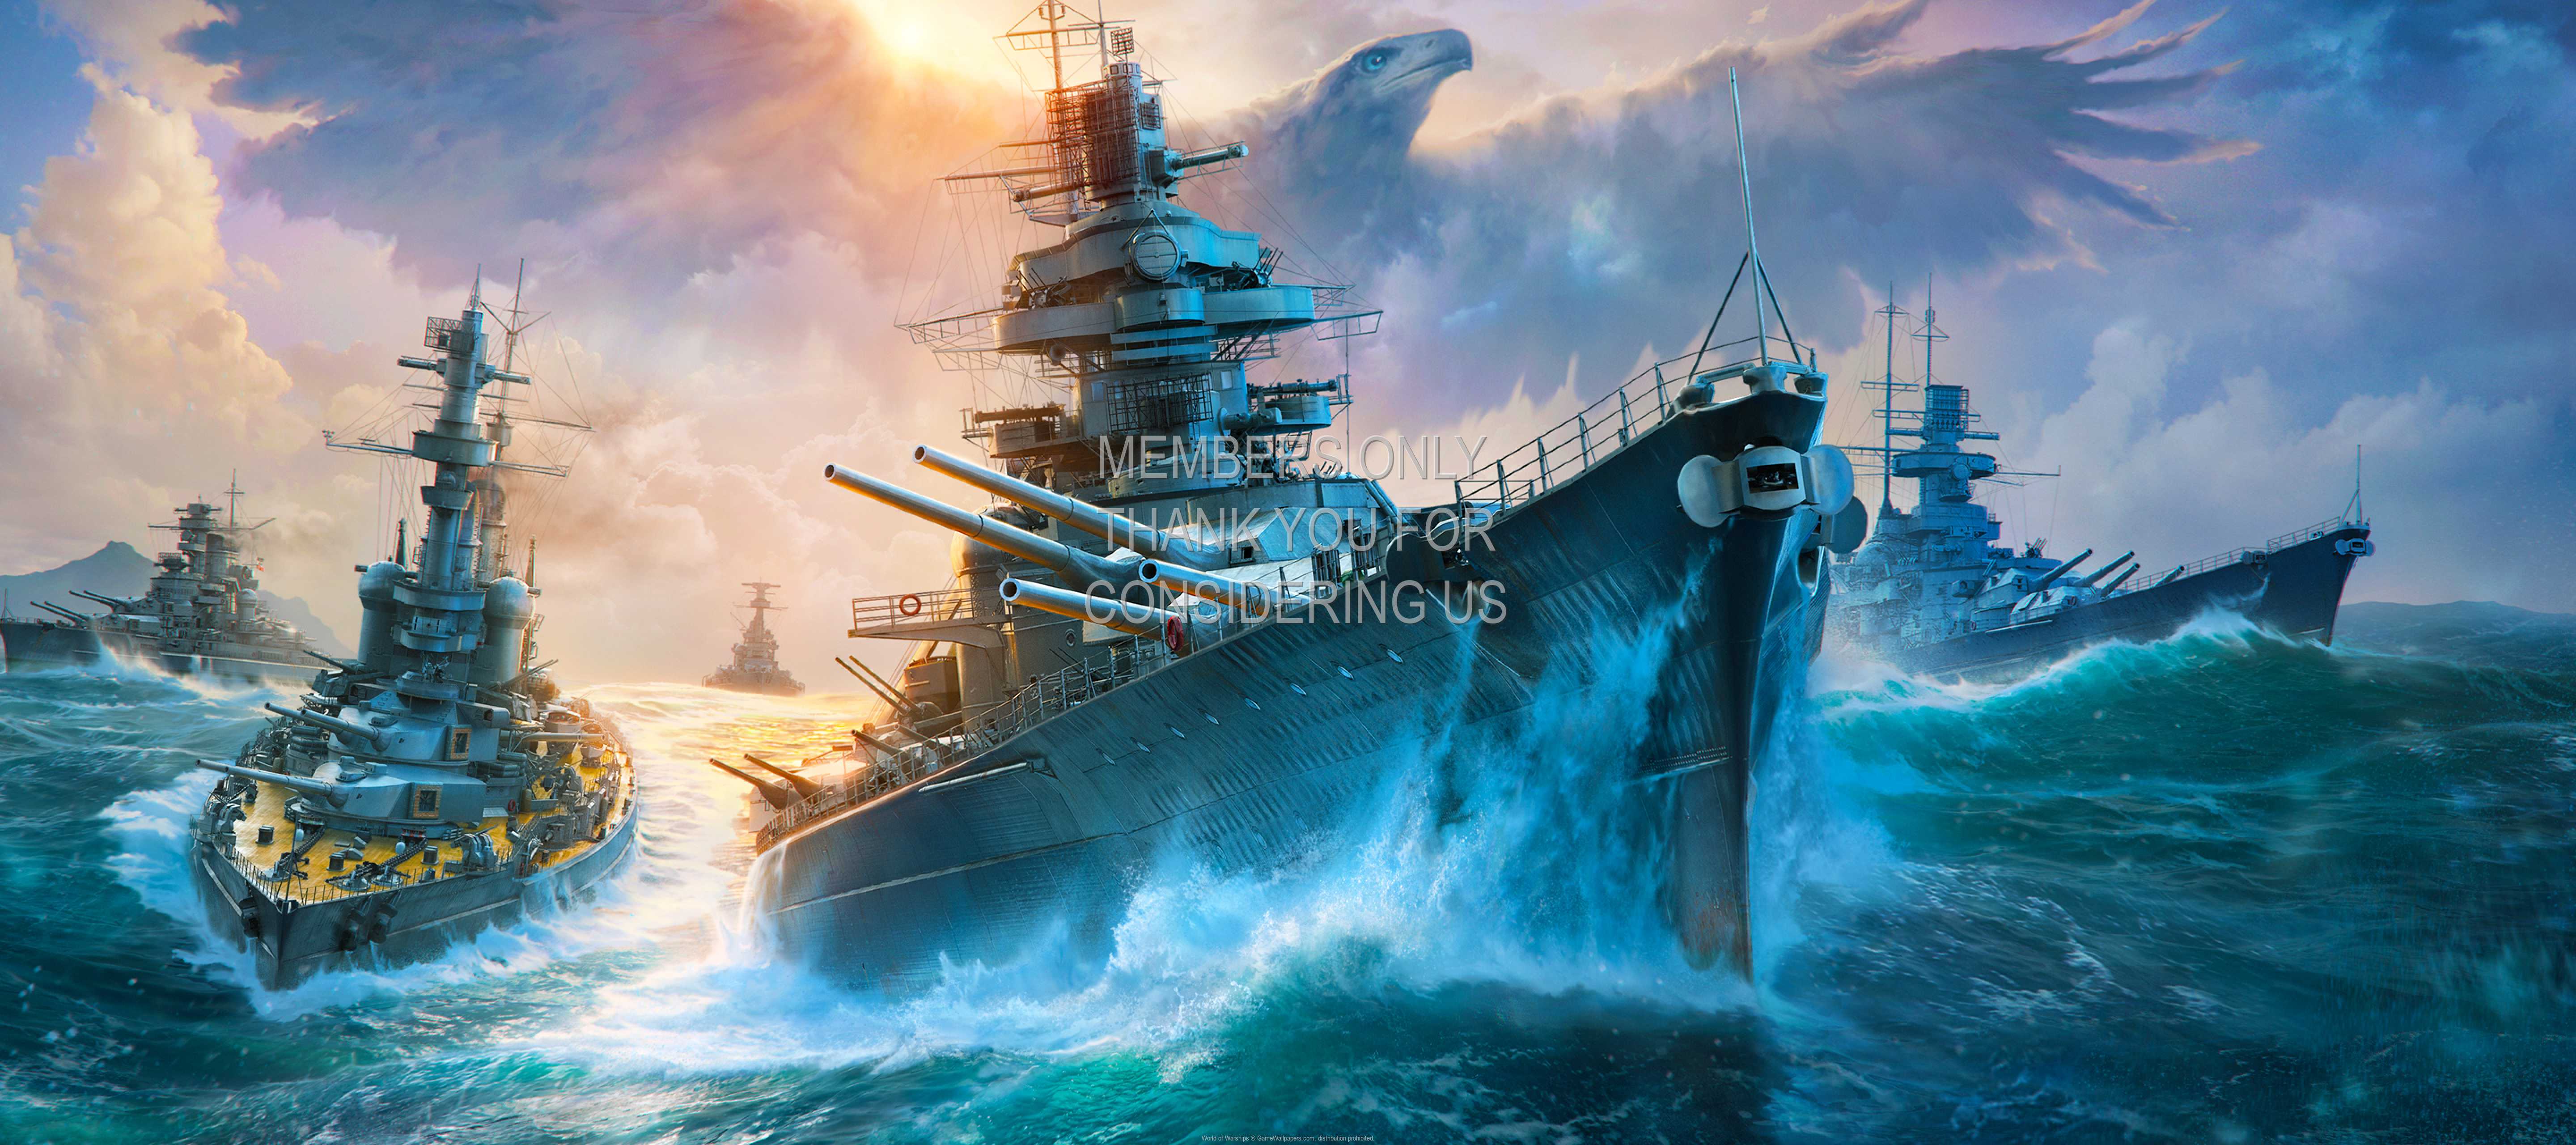 World of Warships 1440p%20Horizontal Mobile wallpaper or background 18